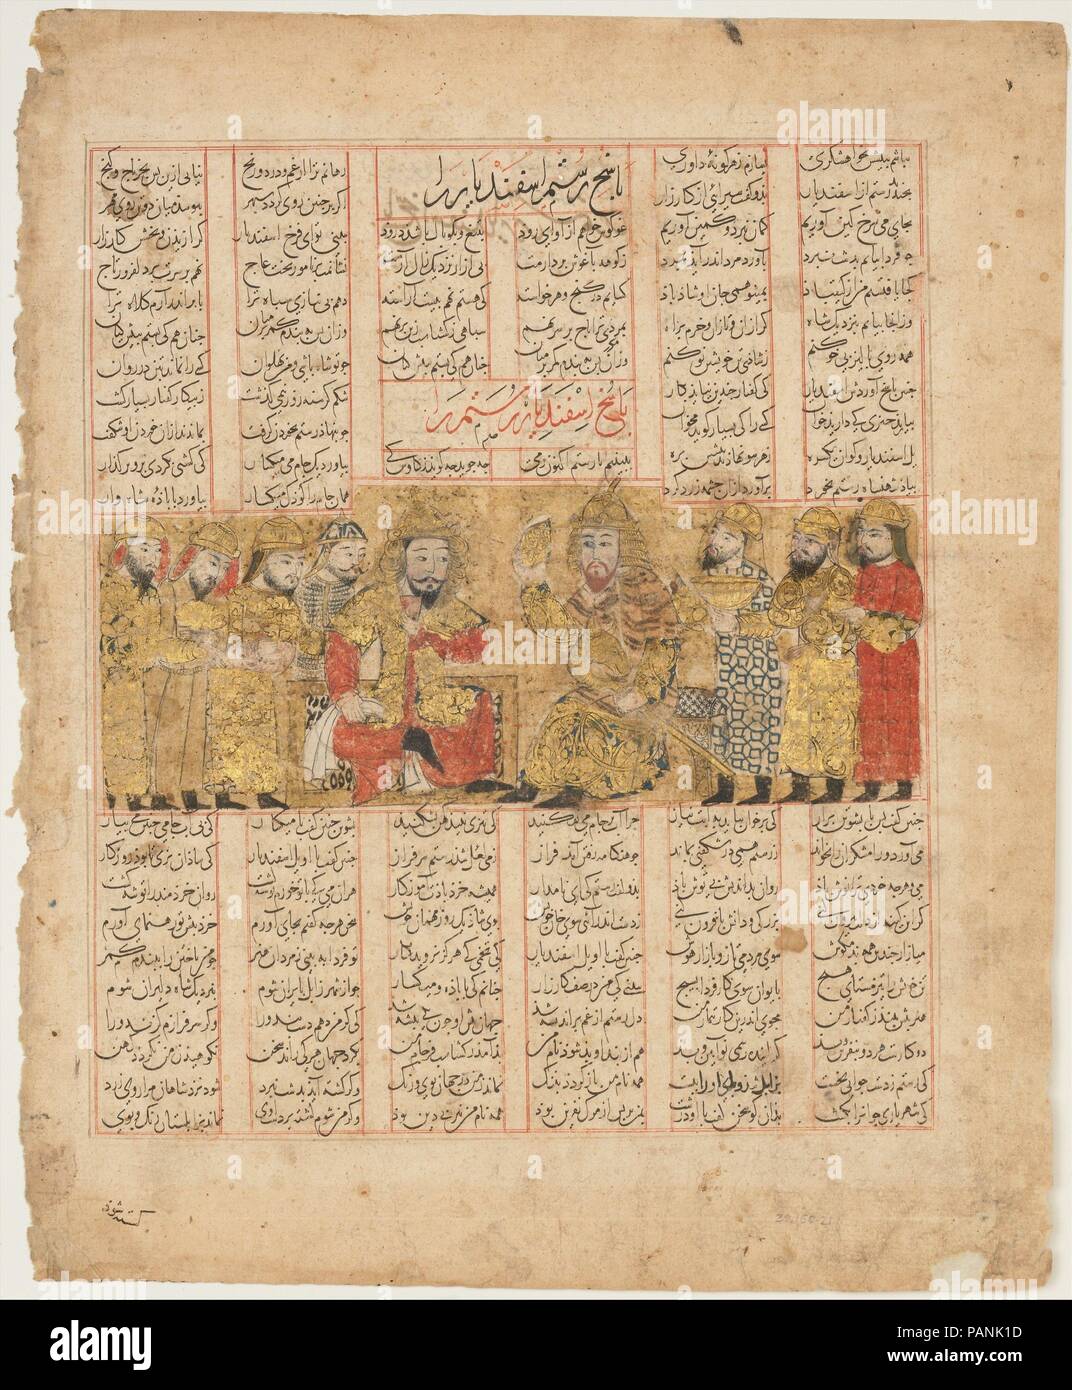 'Rustam discourir avec Isfandiyar', folio d'un Shahnama (Livre des Rois). Auteur : Abu'l Qasim Firdausi (935-1020). Calligraphe : Hasan ibn Muhammad ibn 'Ali ibn ( ?) Husaini, connue sous le nom de al-Mausili. Dimensions : la peinture avec bloc de texte : H.11 1/2 in. (29,2 cm) W. 9 1/2 in. (24,1 cm) Page : H.14 5/8 in. (37.1 cm) W. 11 3/4 in. (29,8 cm) TMC : H. 19 1/4 in. (48,9 cm) 14 1/4 in. W. (36,2 cm). Mécène : commandé par al-Hasan Qawam al-Dawla wa'l-Din (ca. 1303-57). Date : du 741 de l'hégire/A.D. 1341. Musée : Metropolitan Museum of Art, New York, USA. Banque D'Images